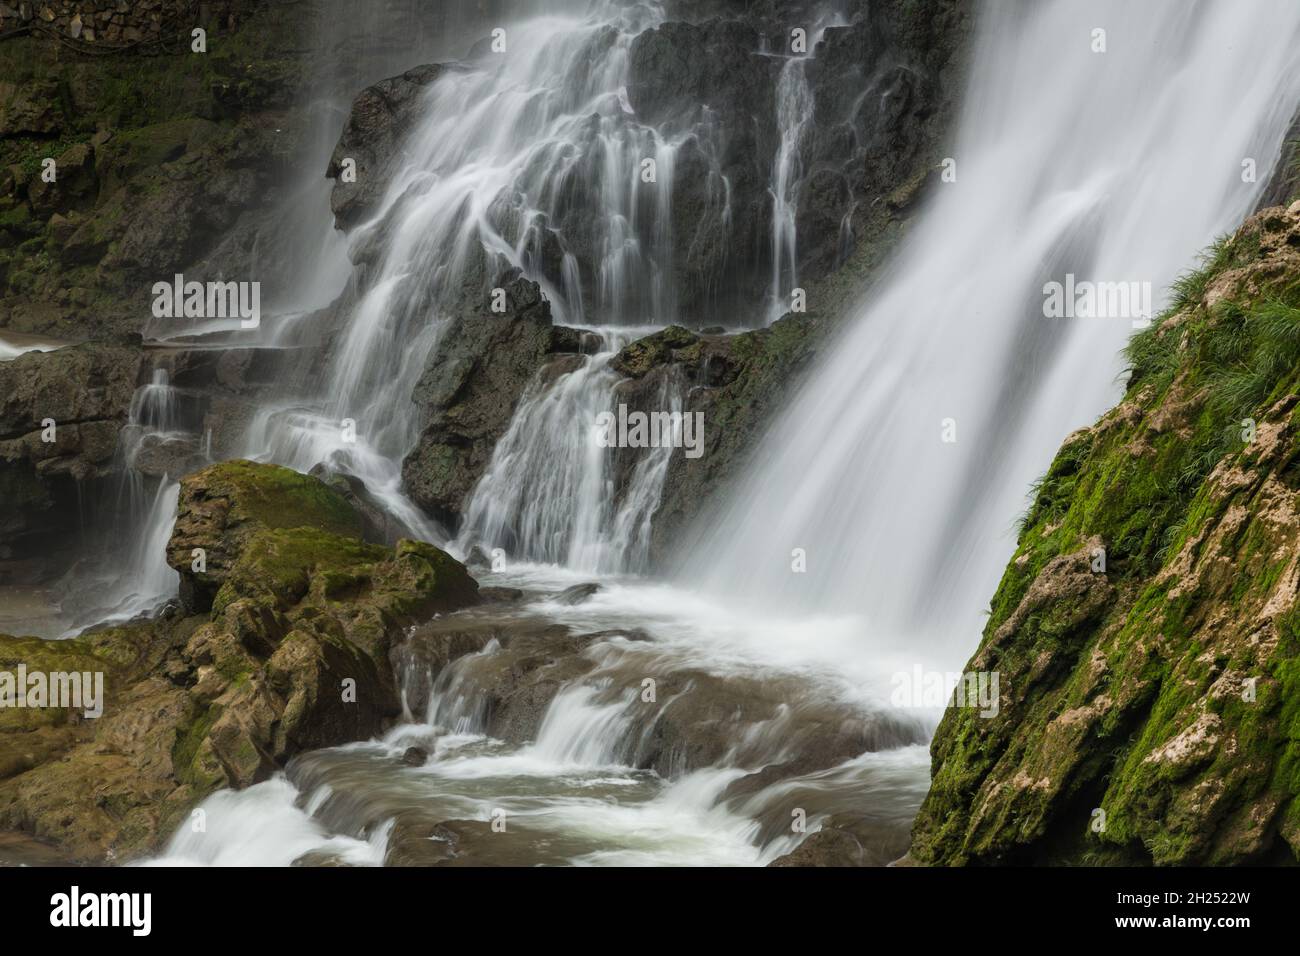 The Wangcun Waterfall in the town of Furong in Hunan Province, China. Stock Photo